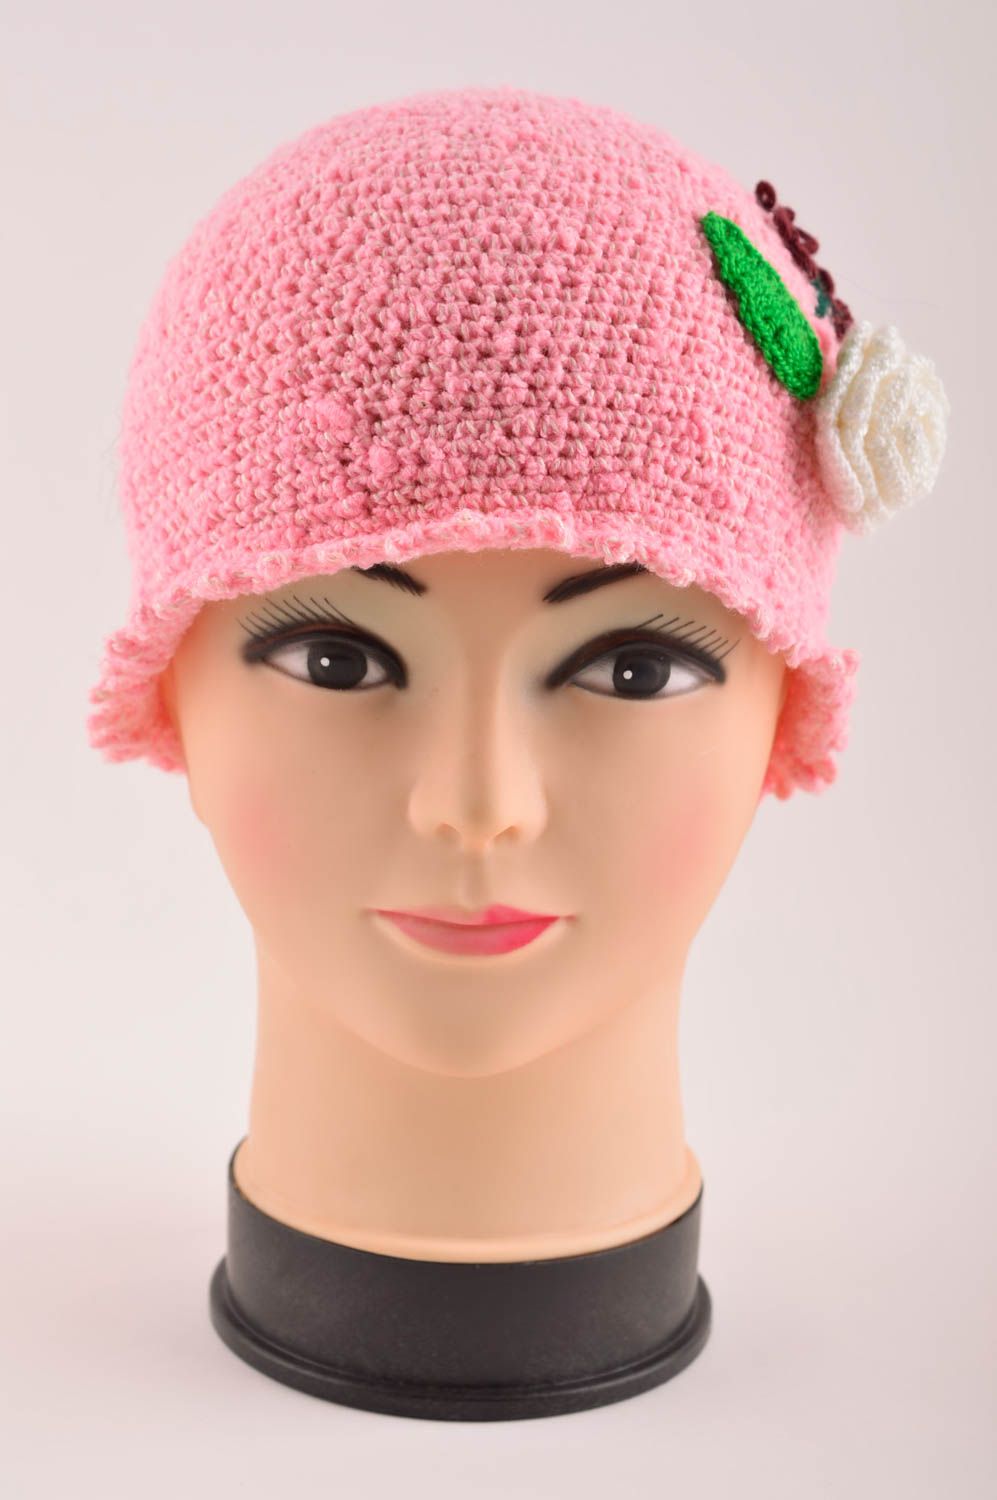 Handmade hat for winter unusual warm hat designer hat for baby gift ideas photo 4